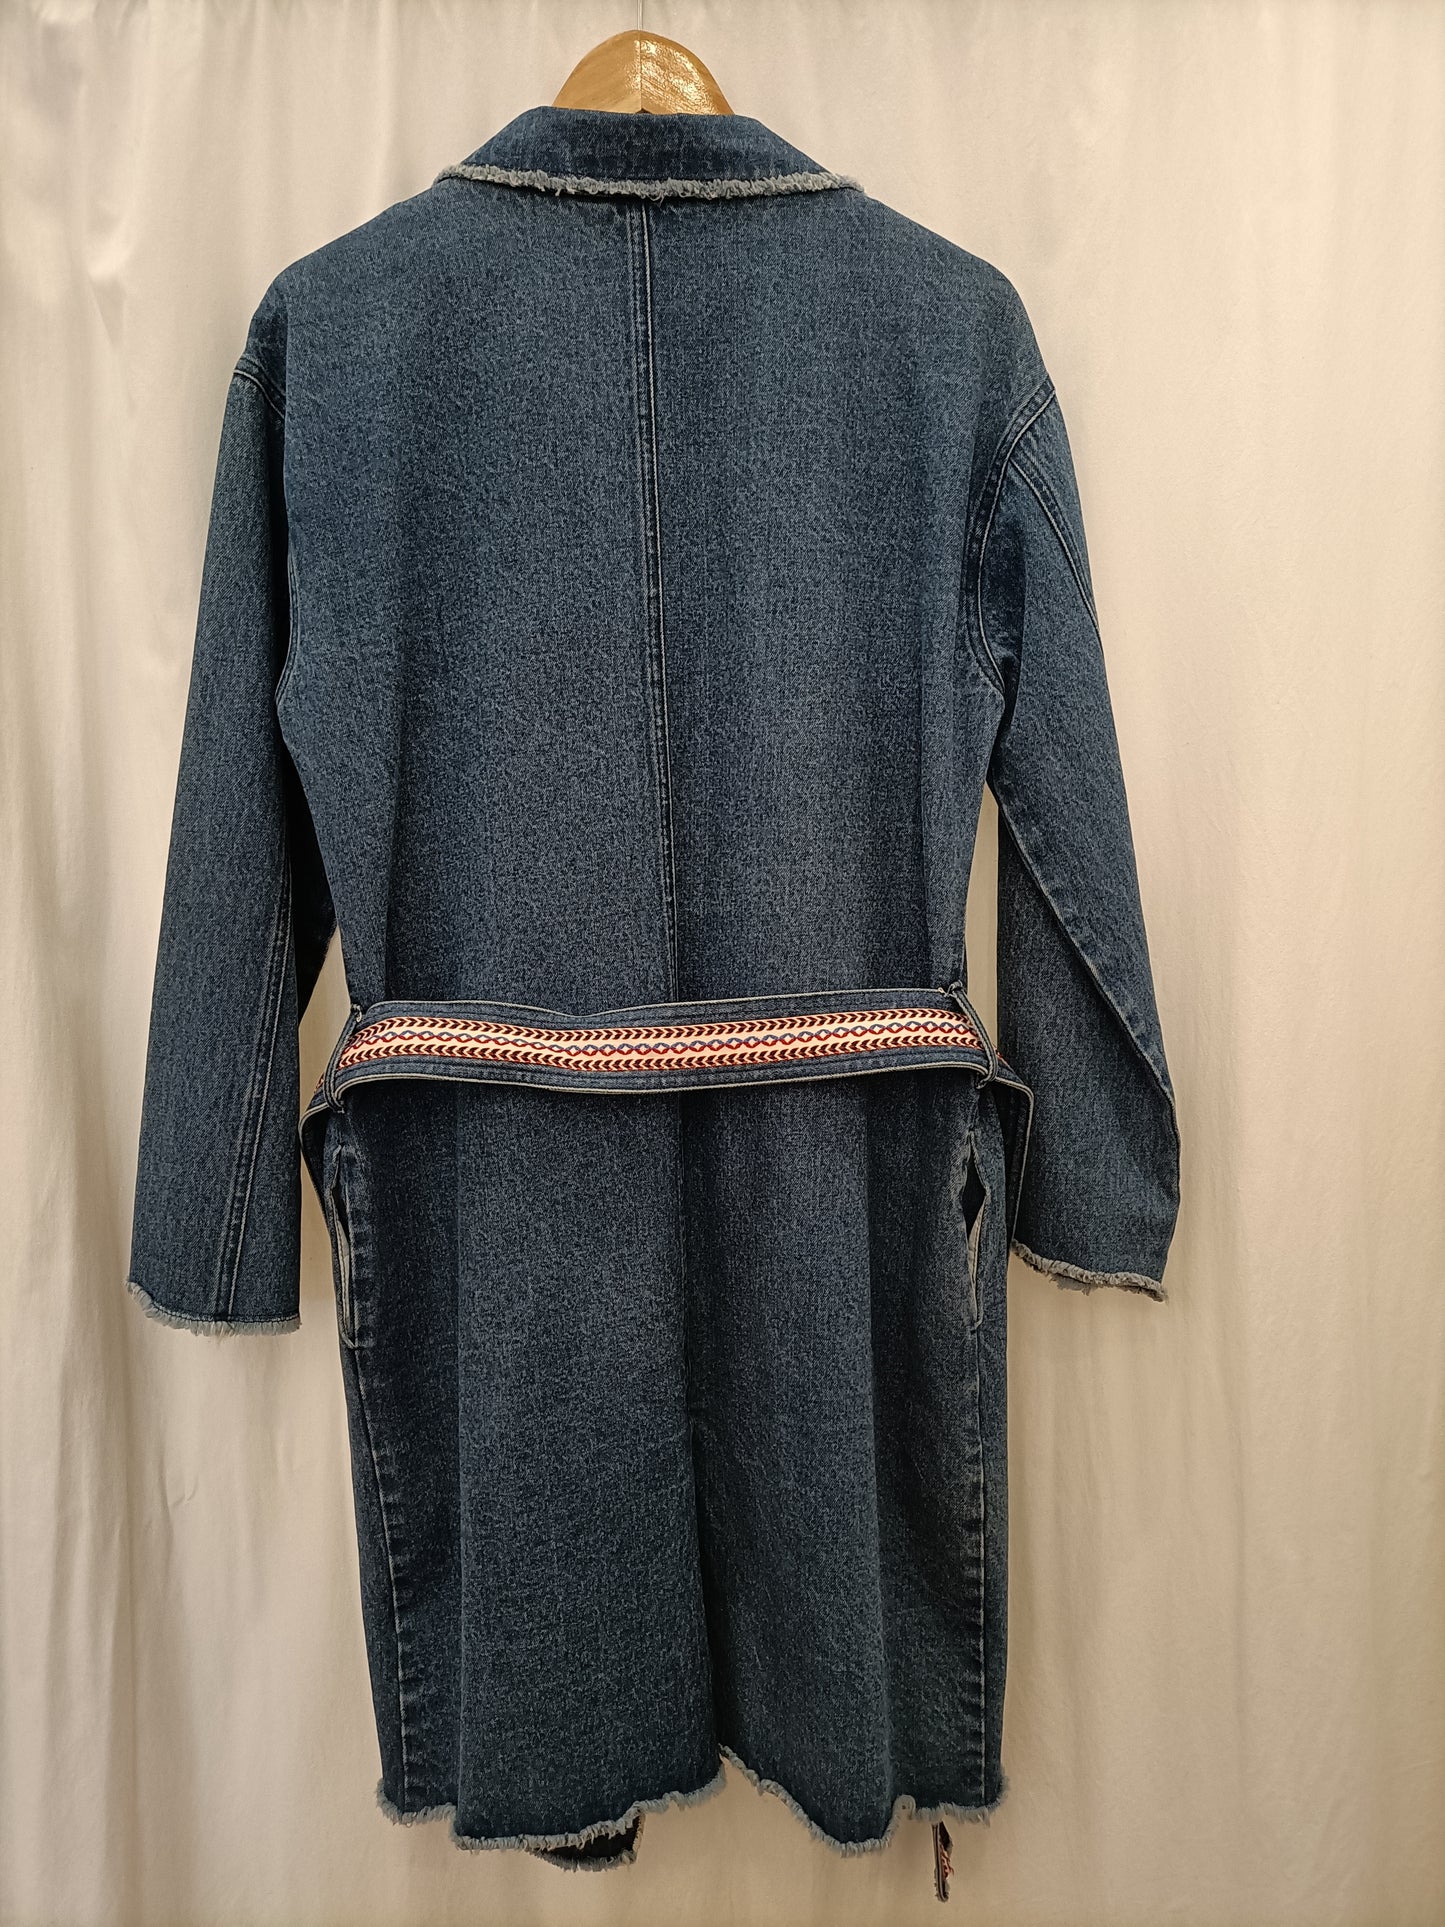 Trelise Cooper - Long Denim Coat - Size S/M